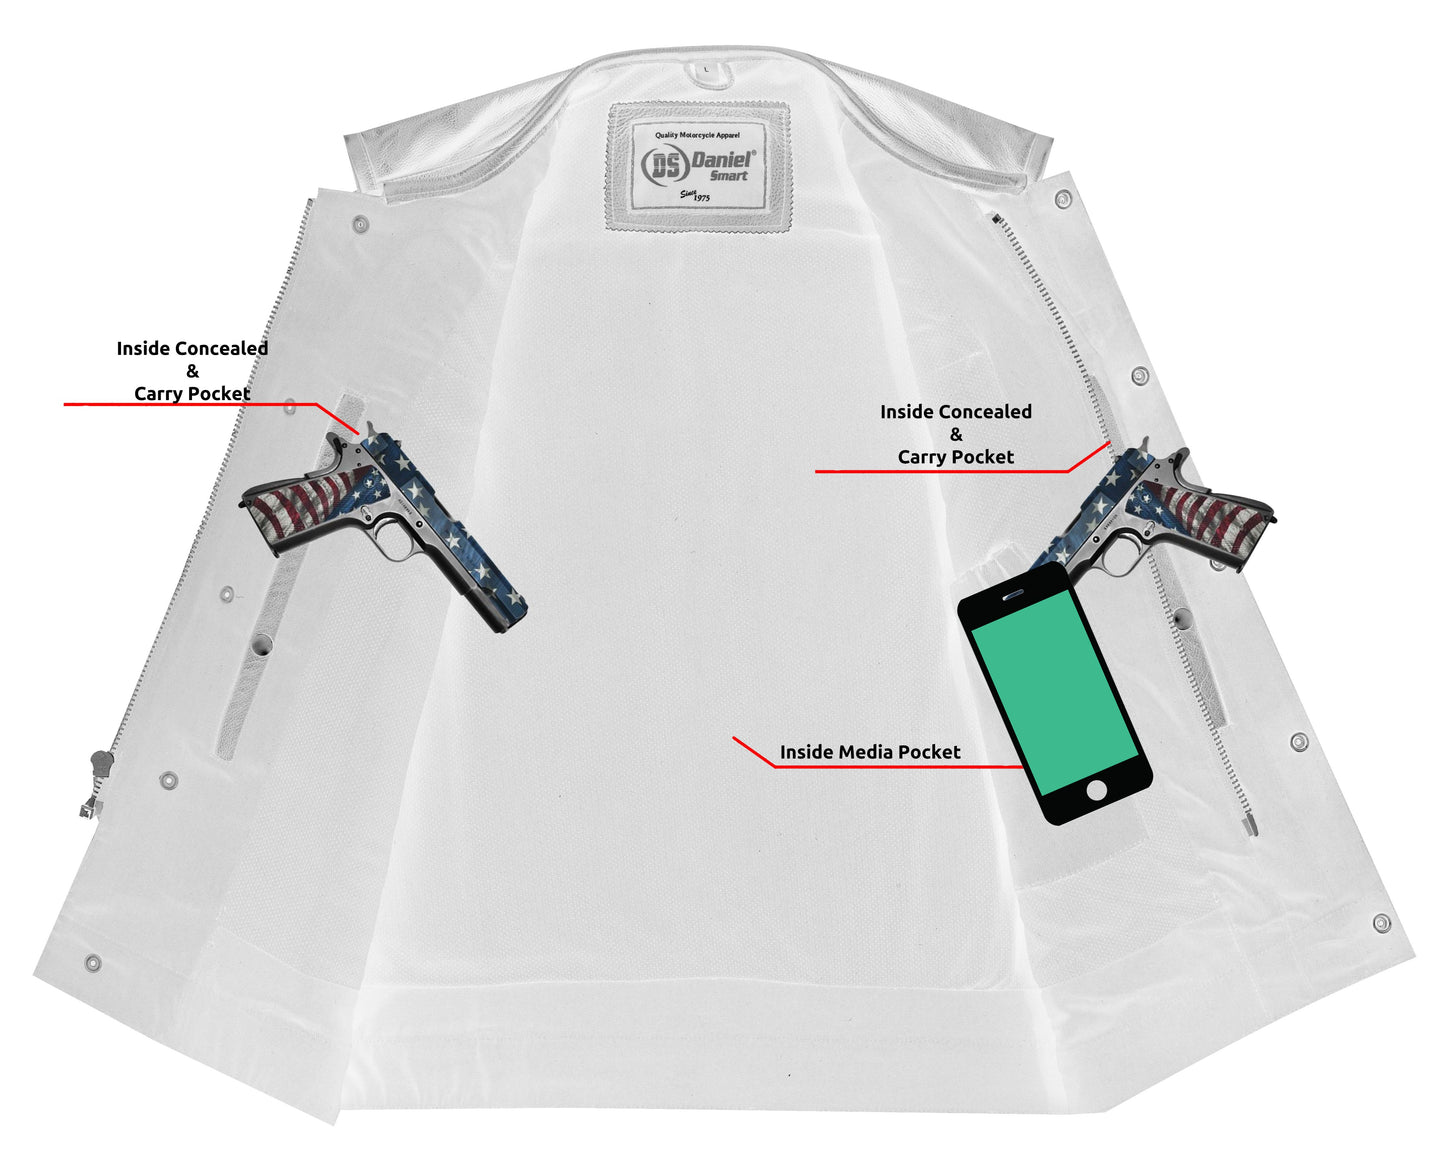 Men's Premium Perforated Single Back Panel Concealment Vest W/O